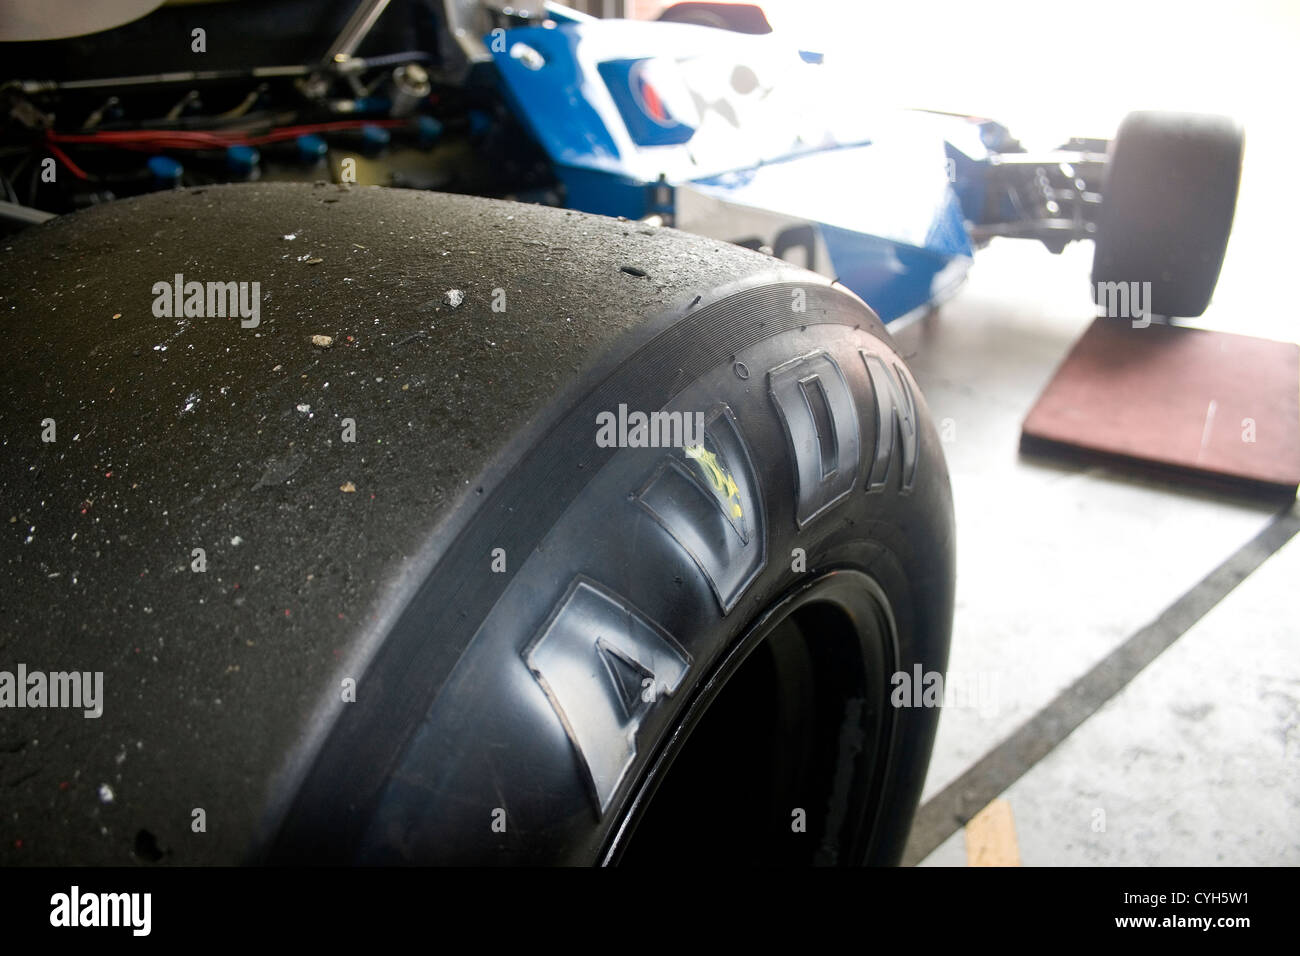 Un Avon pneumatico slick su una storica F1 racing car Foto stock - Alamy